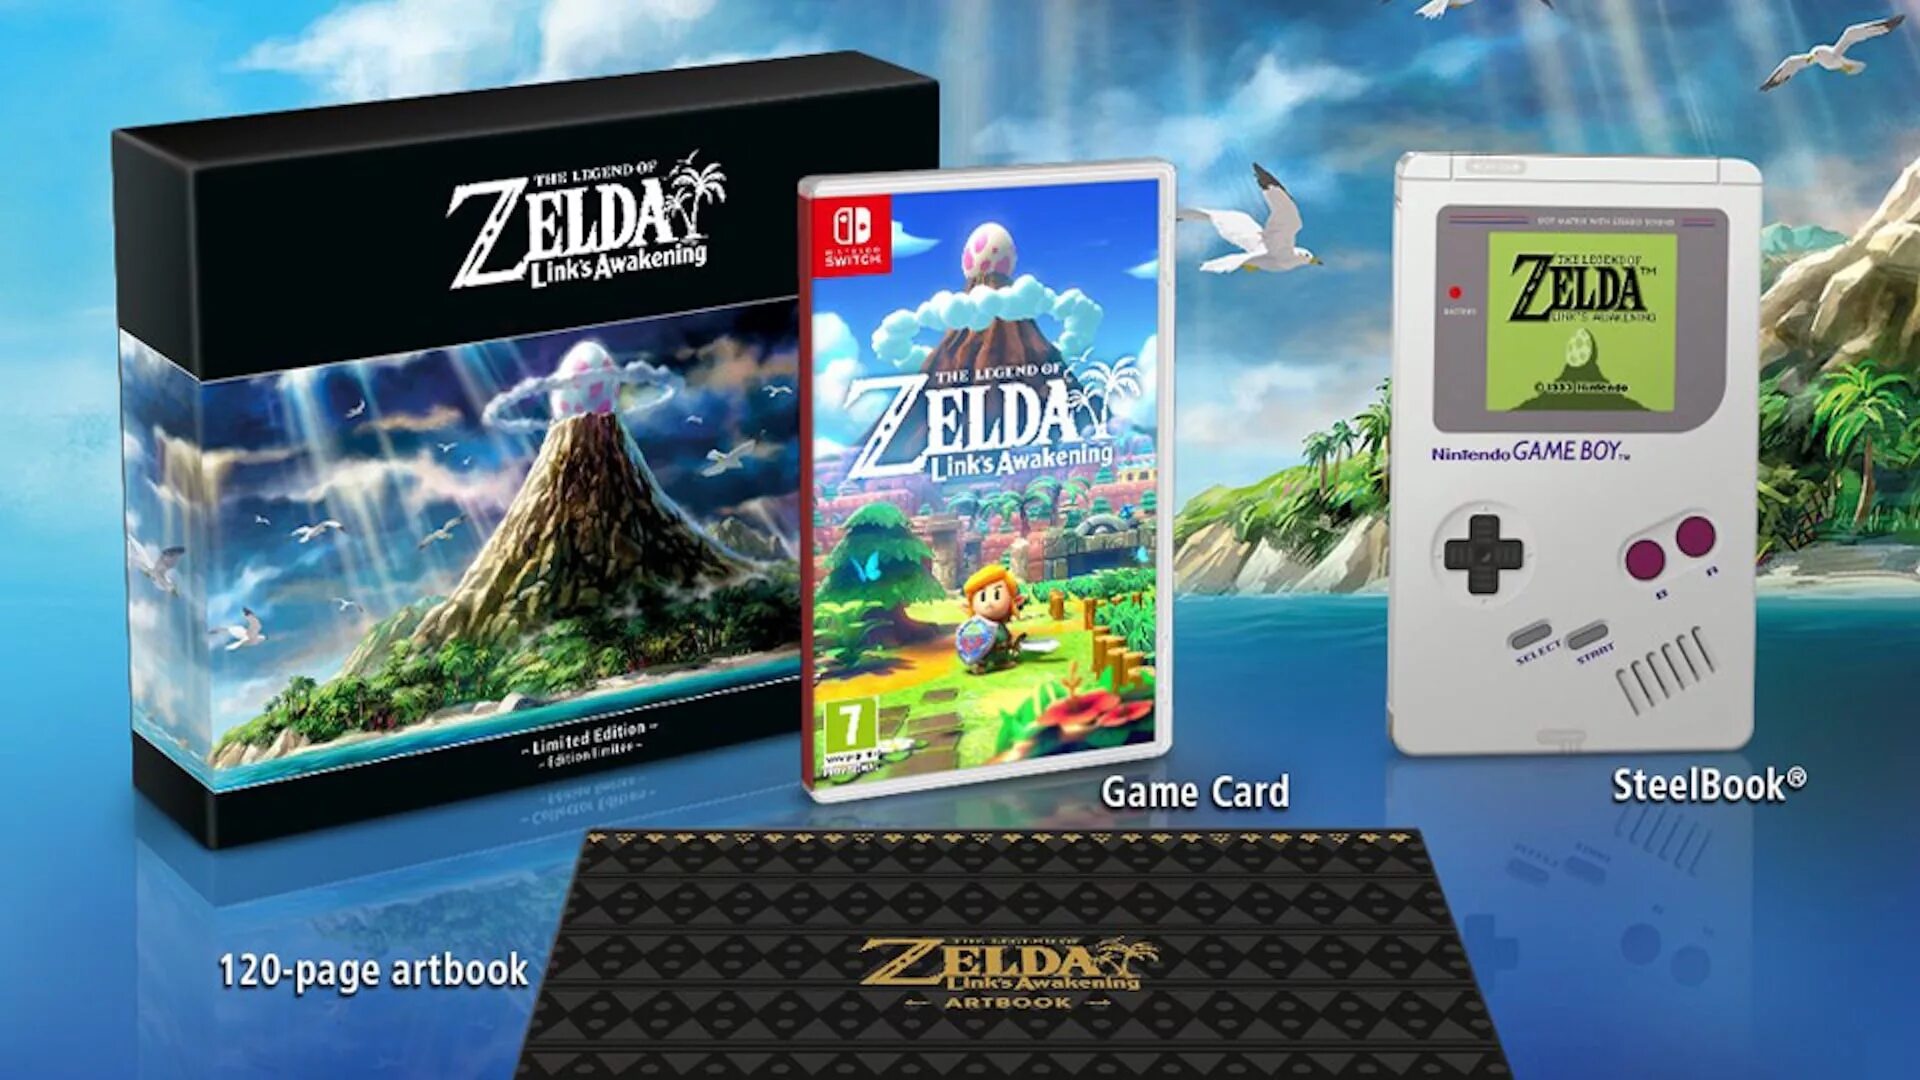 Legend of Zelda: link's Awakening Limited Edition. Zelda link's Awakening Nintendo Switch. Зельда игра на Нинтендо. The Legend of Zelda коллекционное издание.